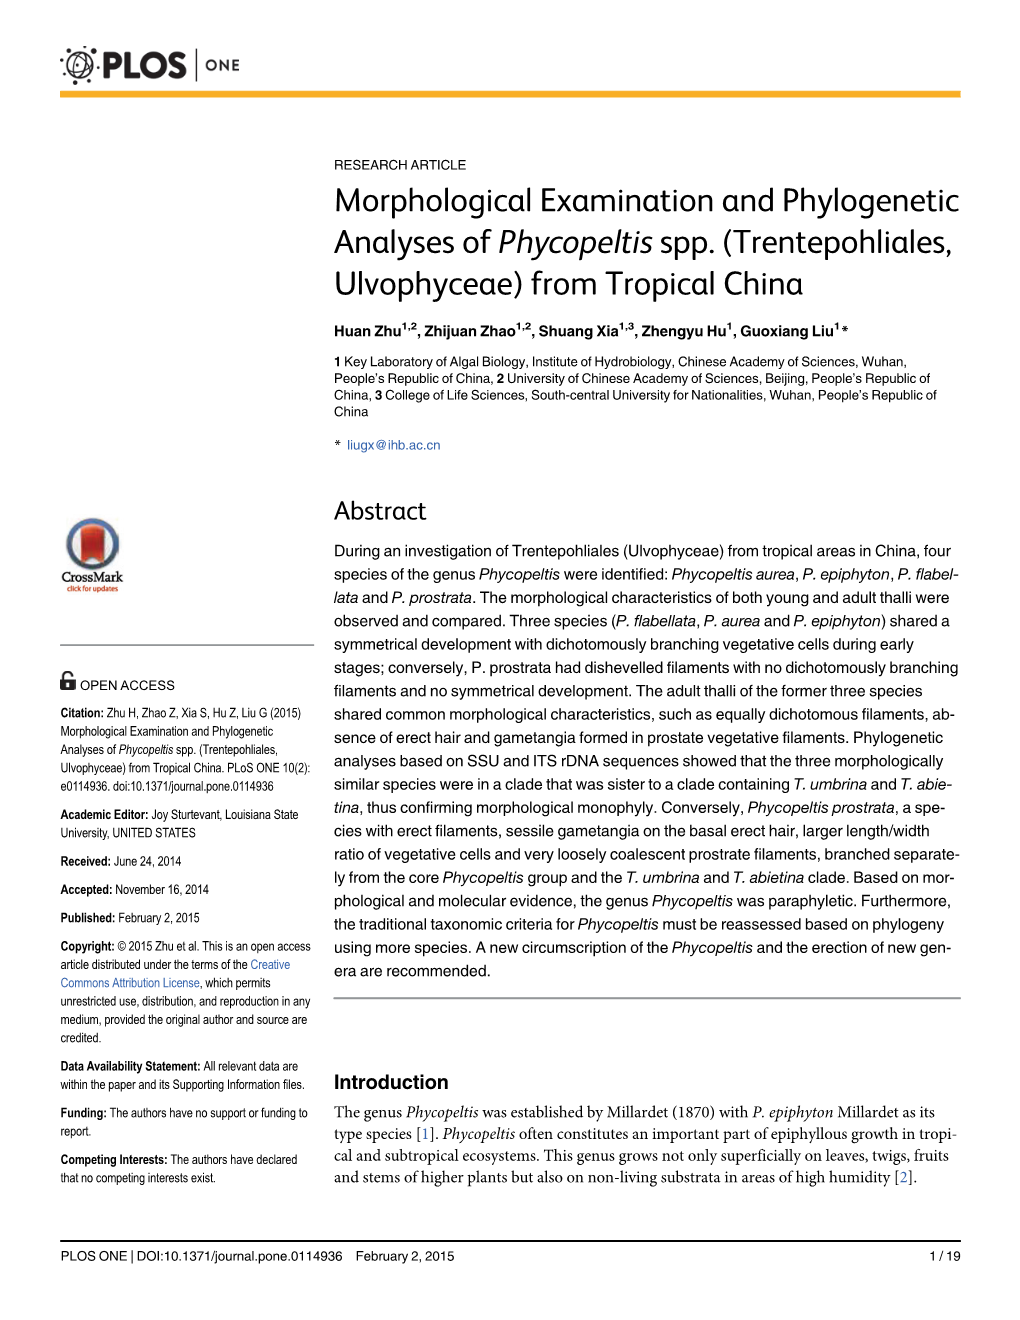 Morphological Examination and Phylogenetic Analyses of Phycopeltis Spp